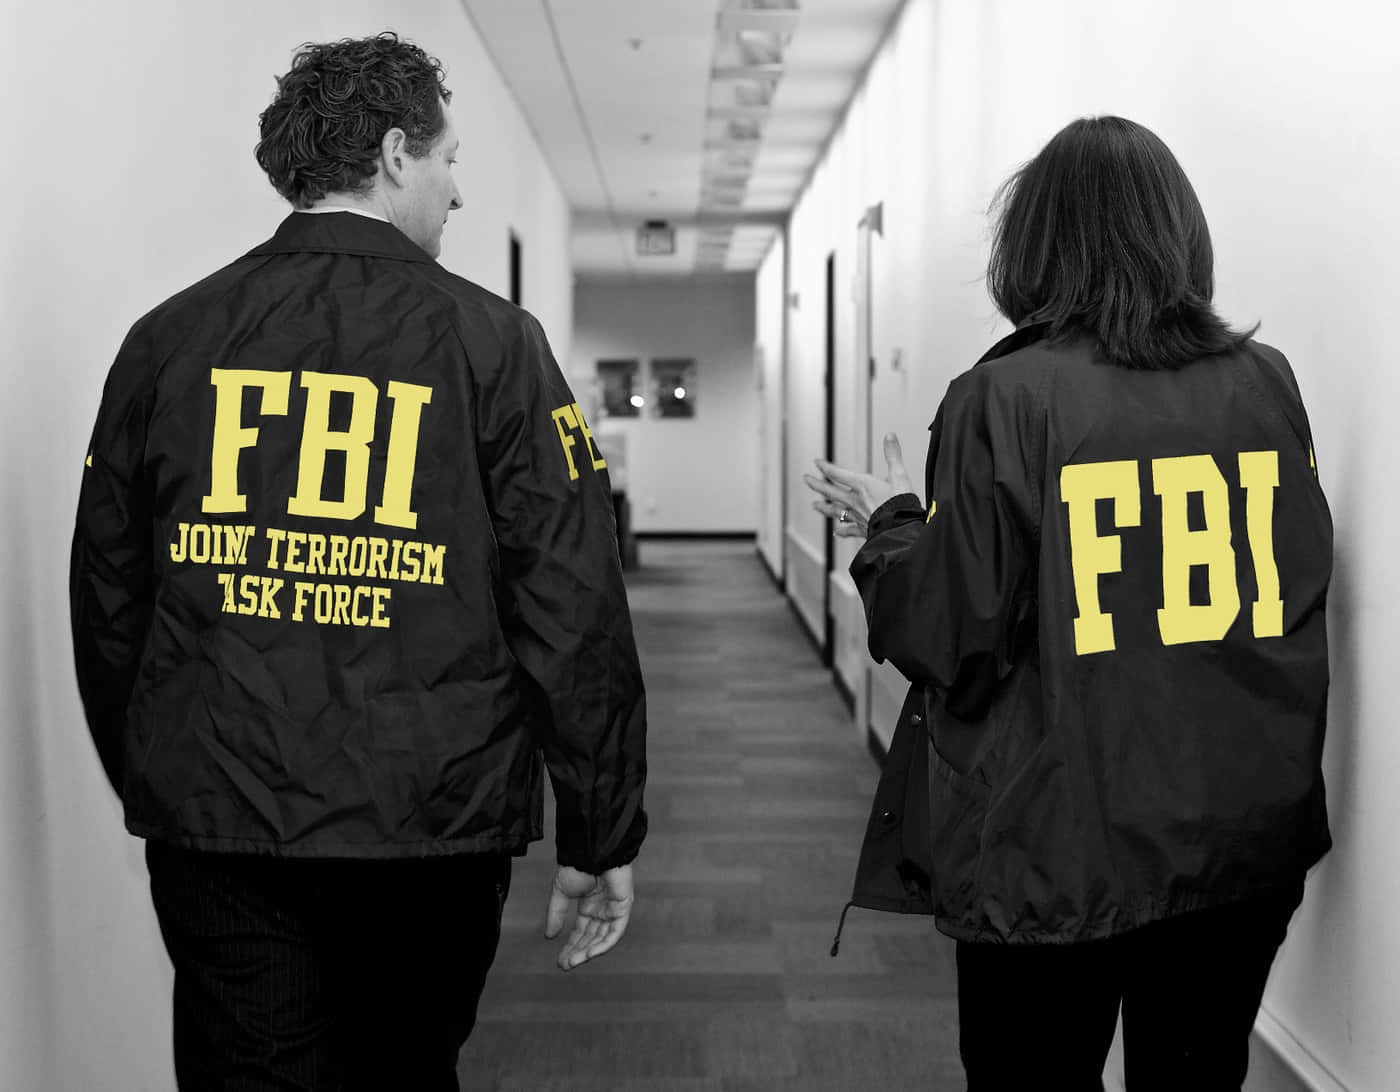 Two People In Fbi Jackets Walking Down A Hallway Background